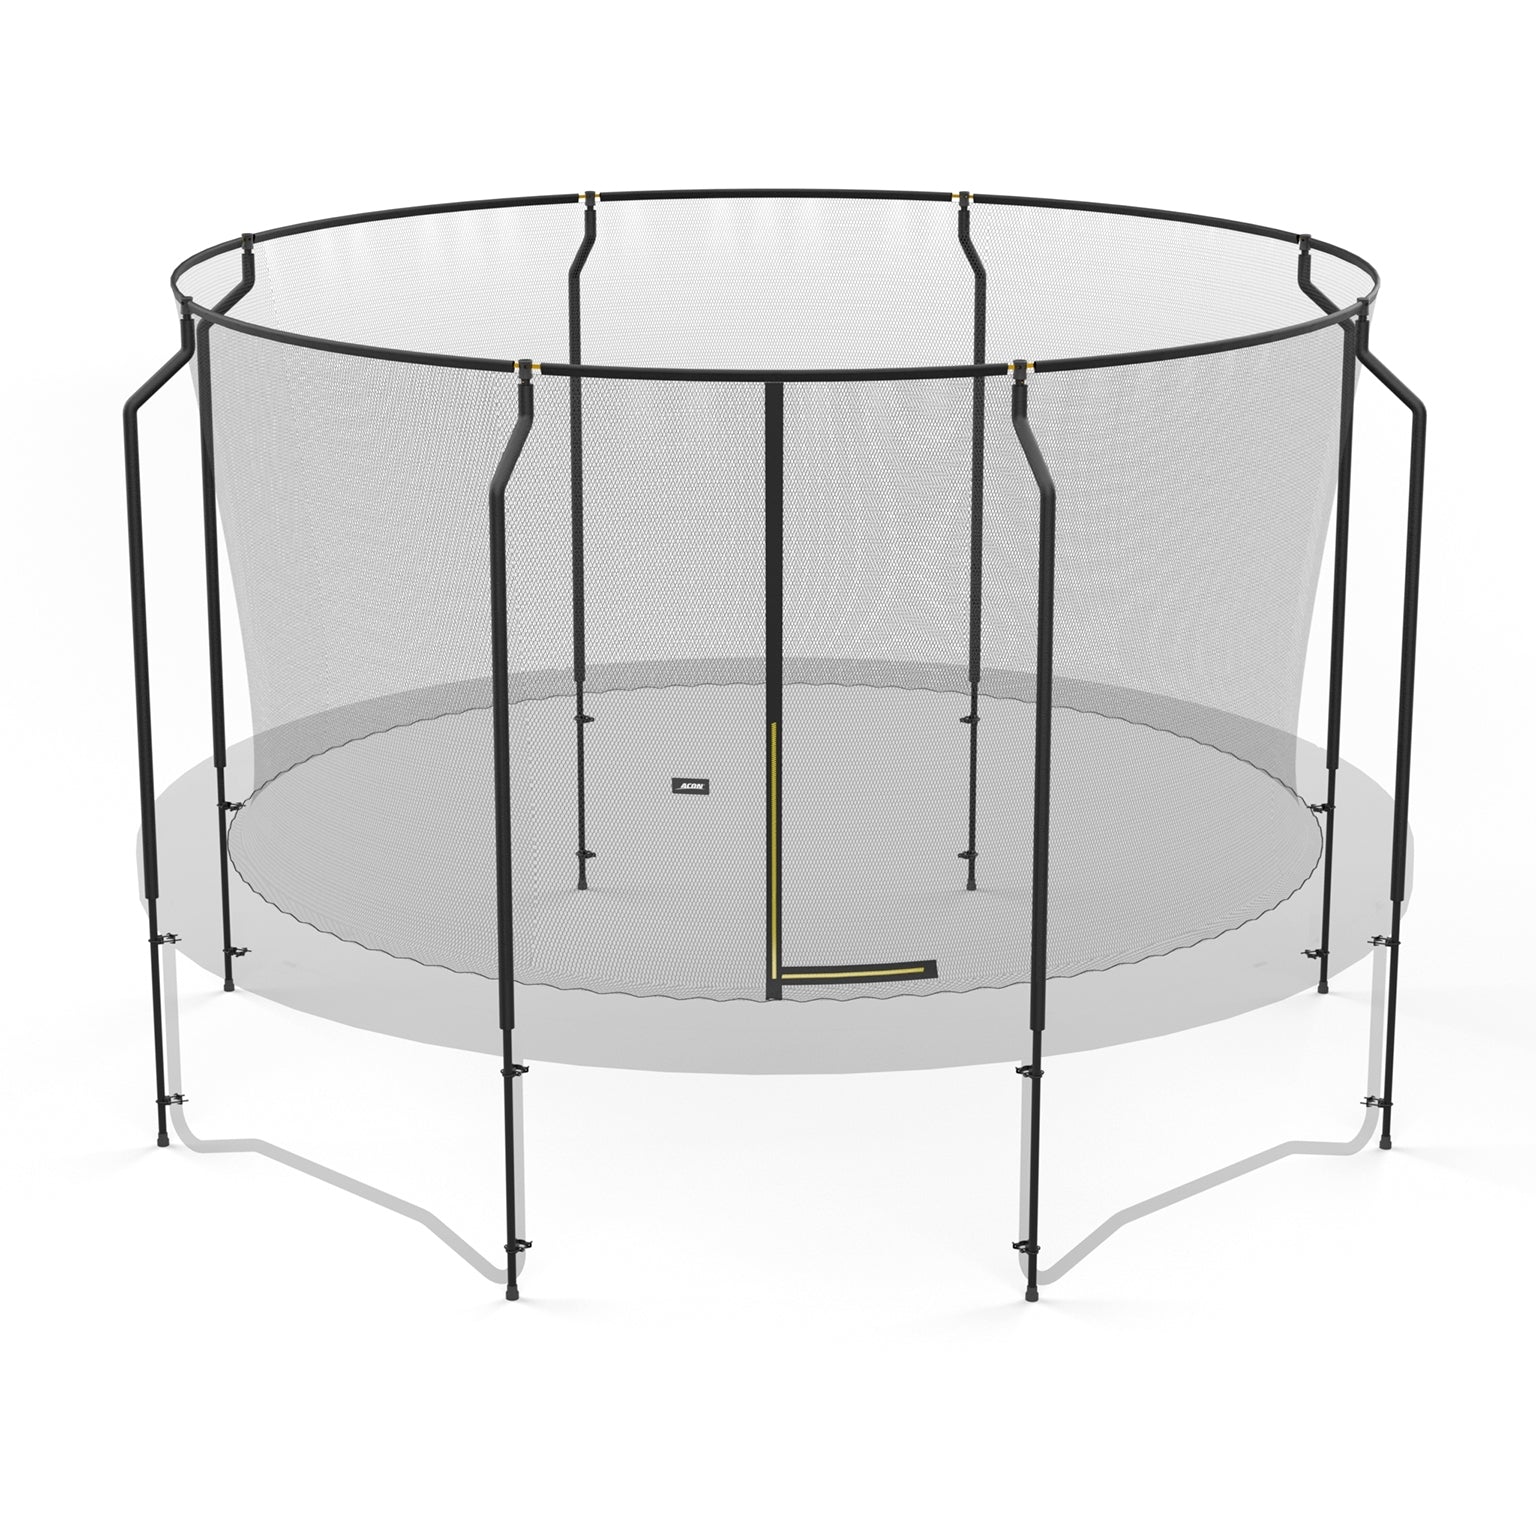 ACON Premium Enclosure attached to the trampoline.